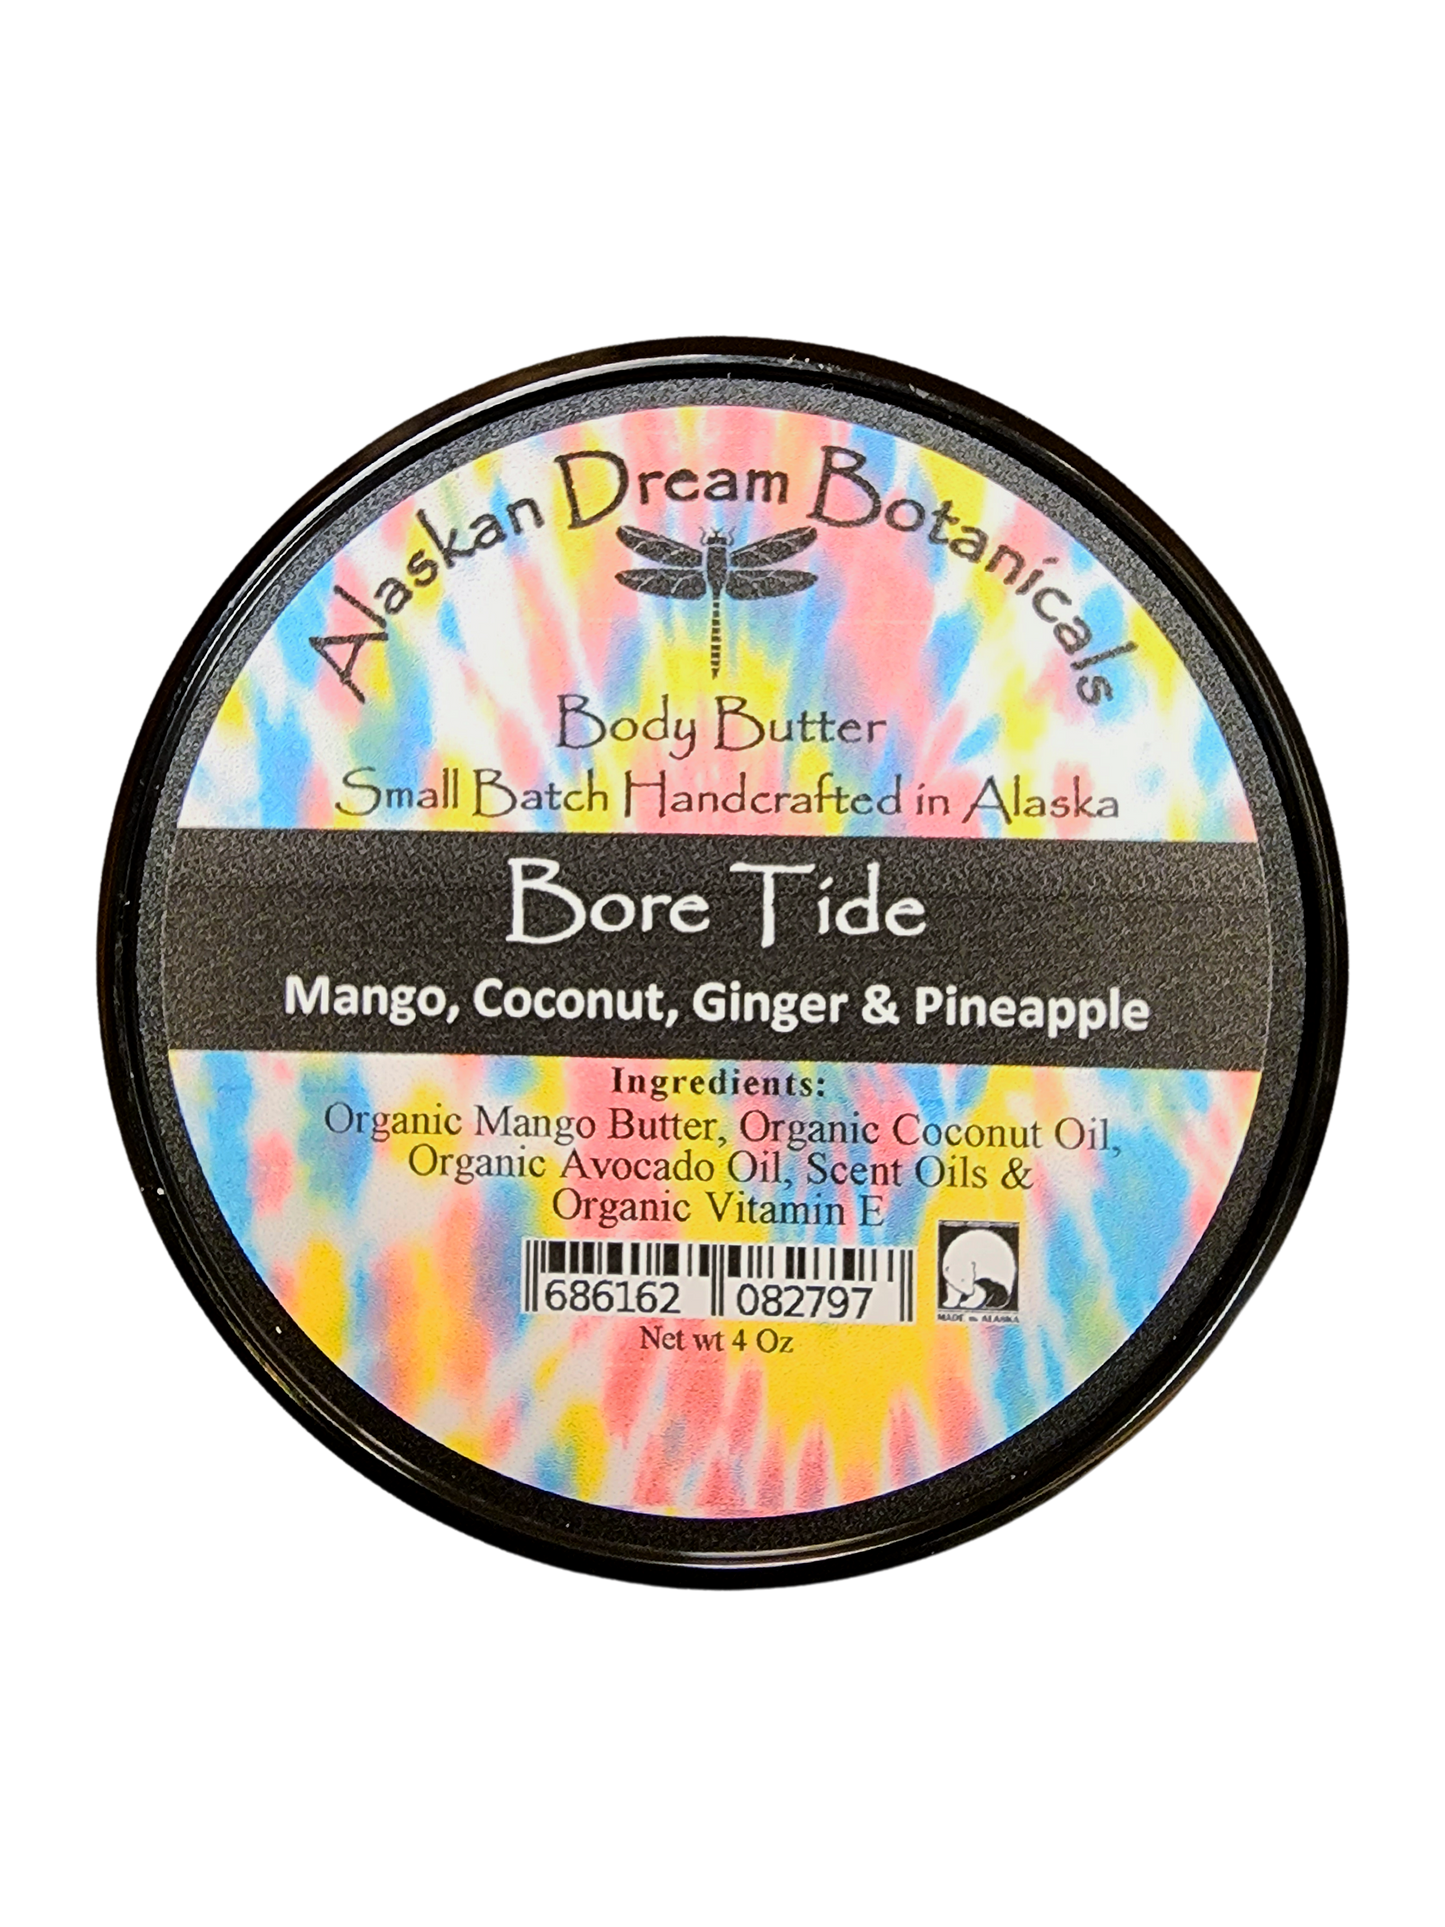 Bore Tide Everyday Body Butter - Alaskan Dream Botanicals